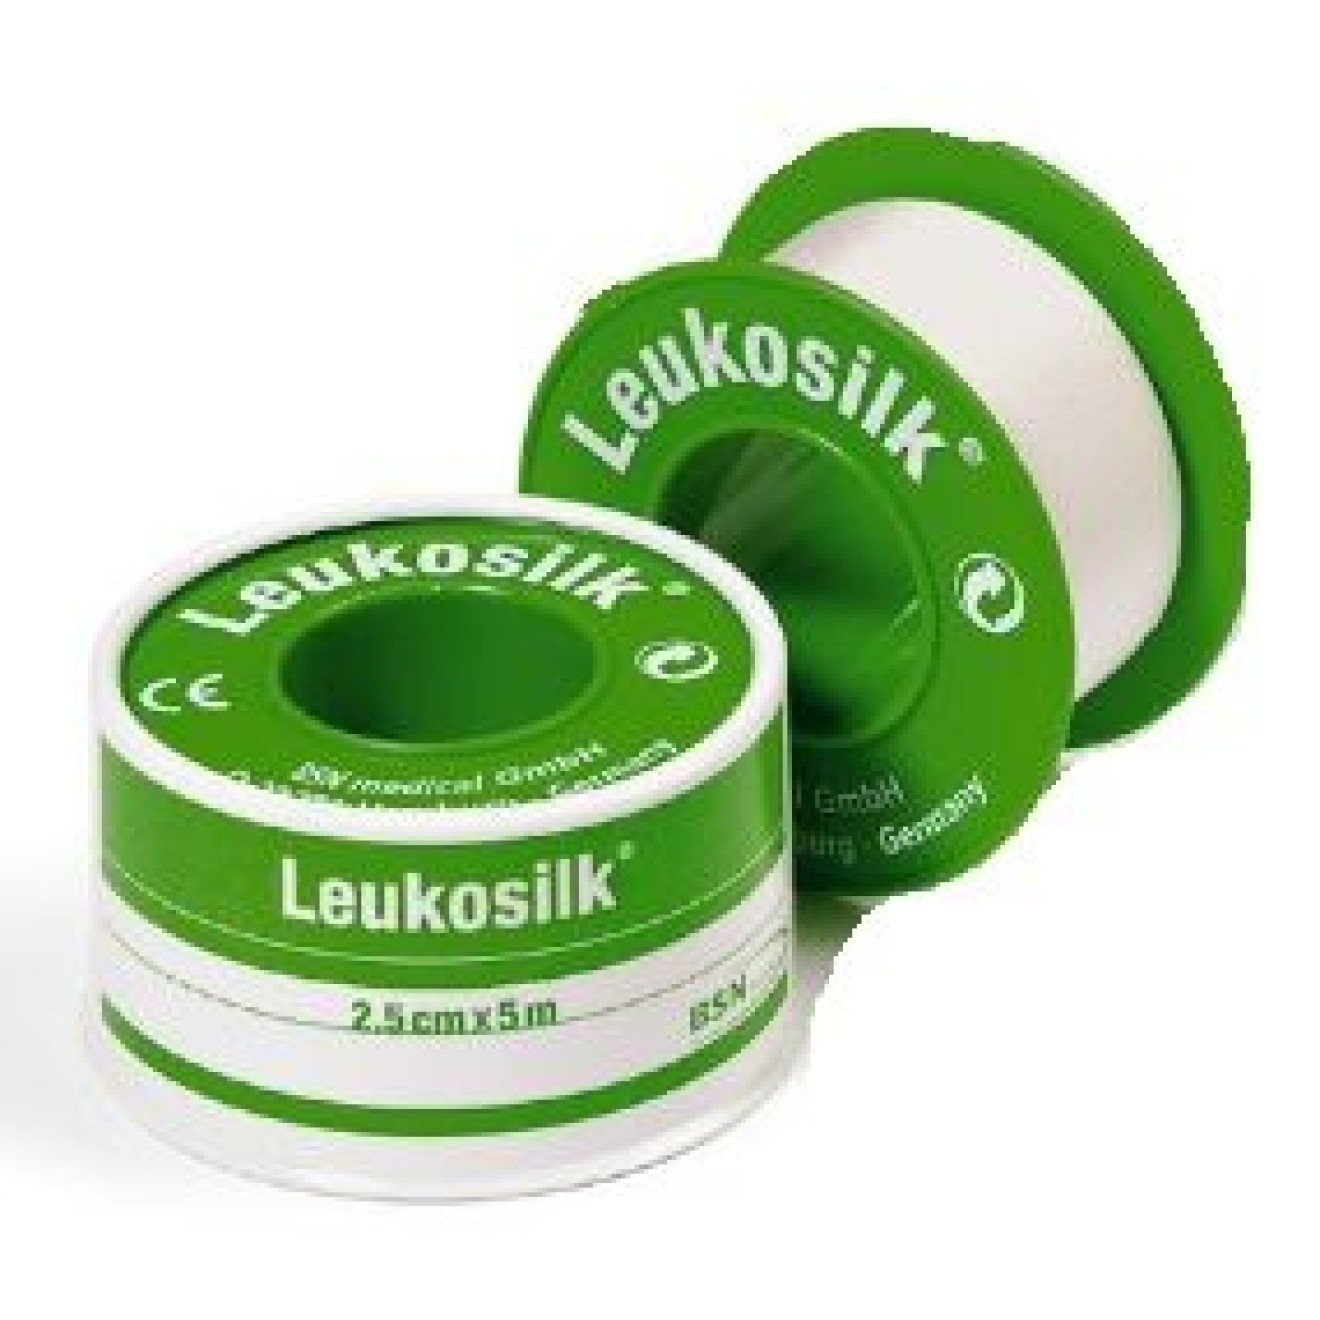 LEUKOSILK 2,5 cmx5 m 12 Stück - Rollenpflaster - Pflaster - Wundversorgung  - Praxisbedarf - Viktoria Apotheke